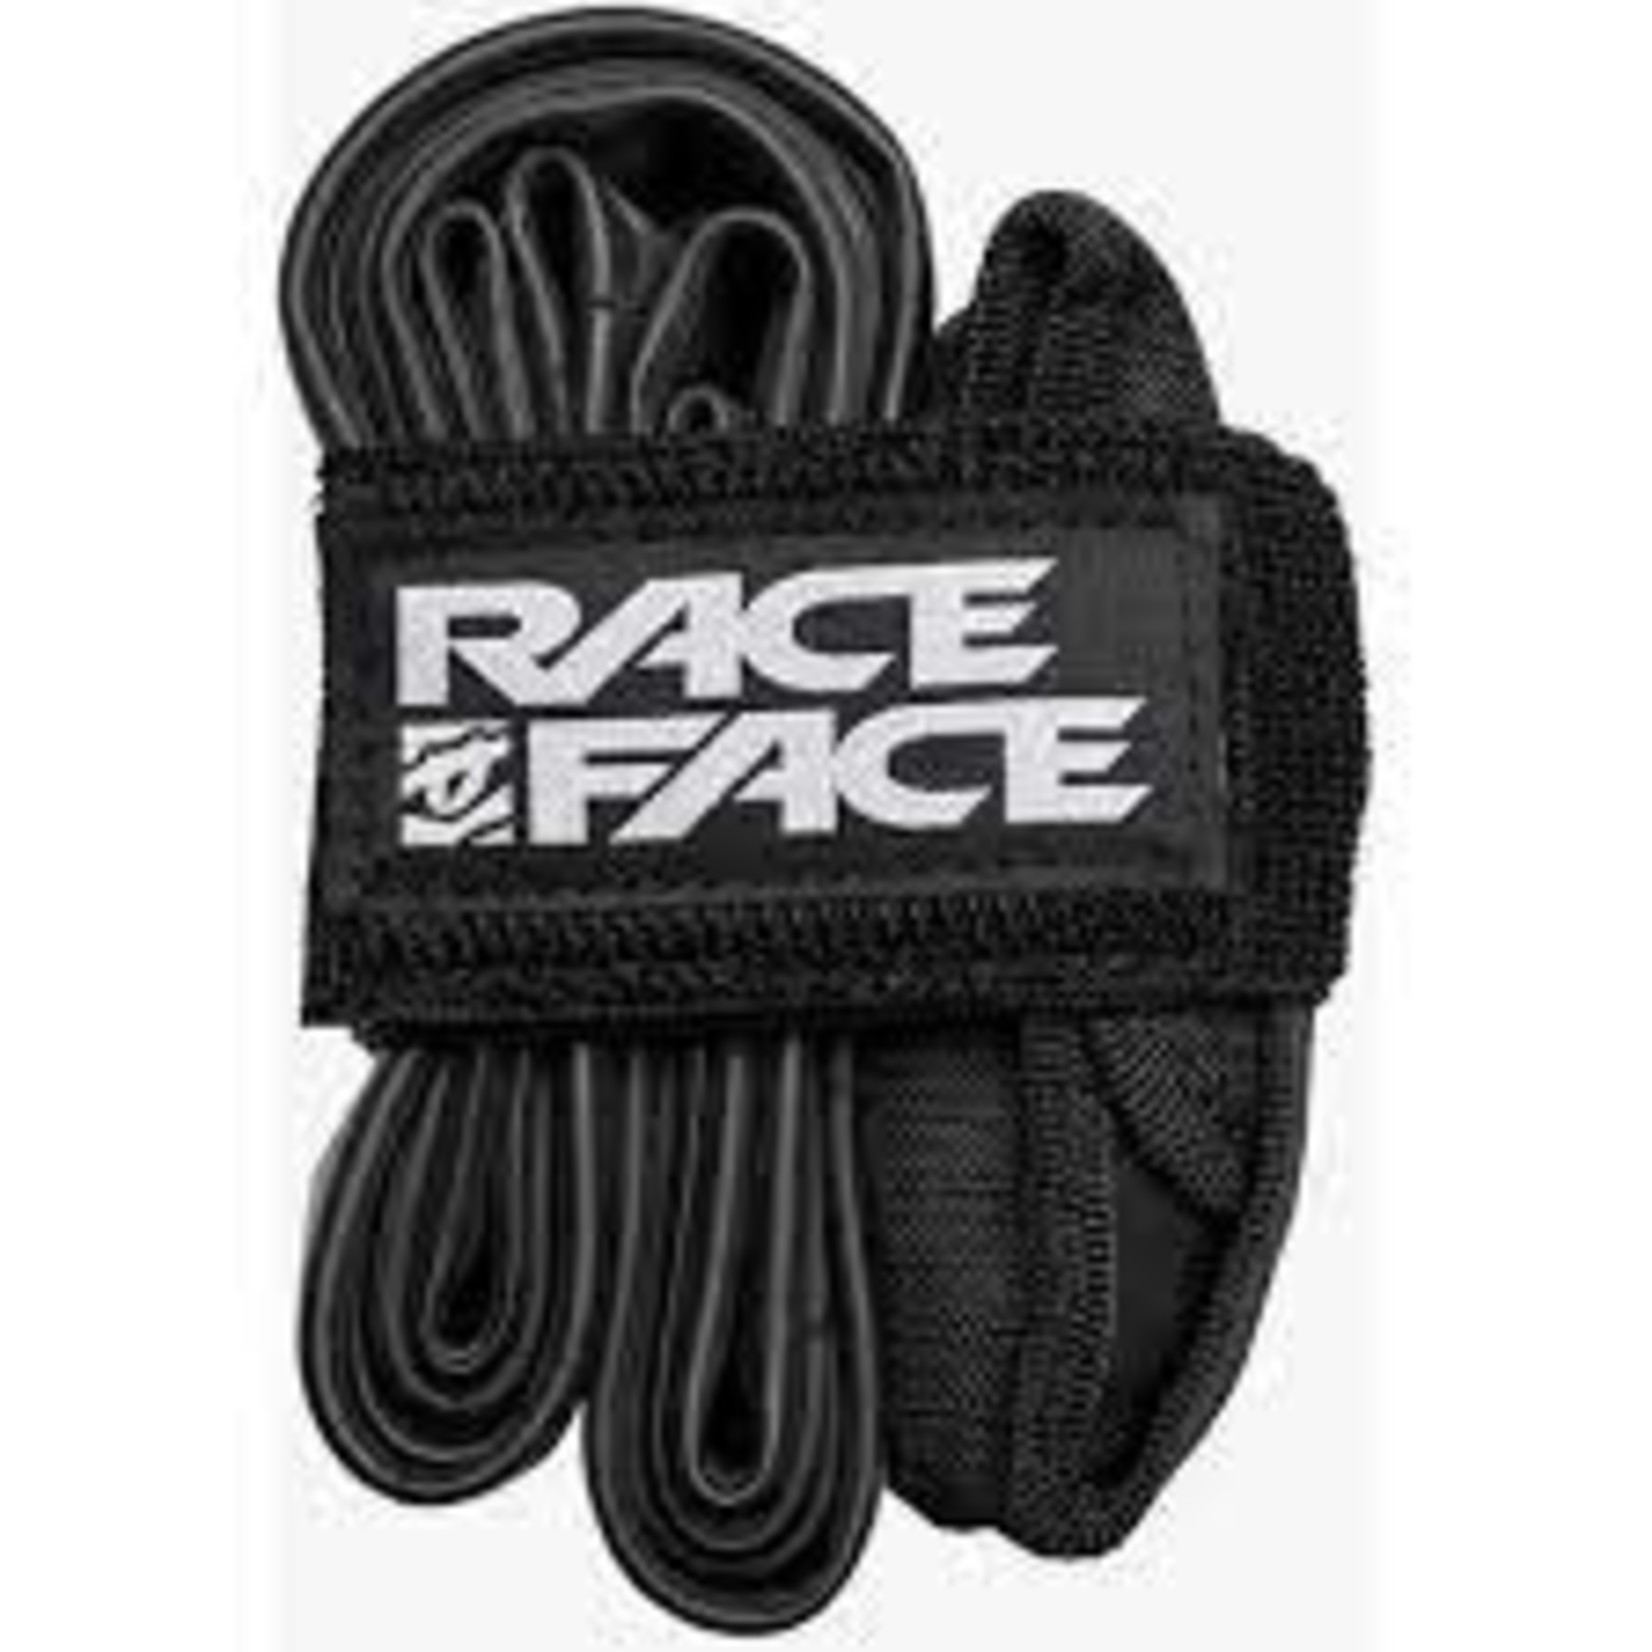 Race Face Raceface Stash toolwrap